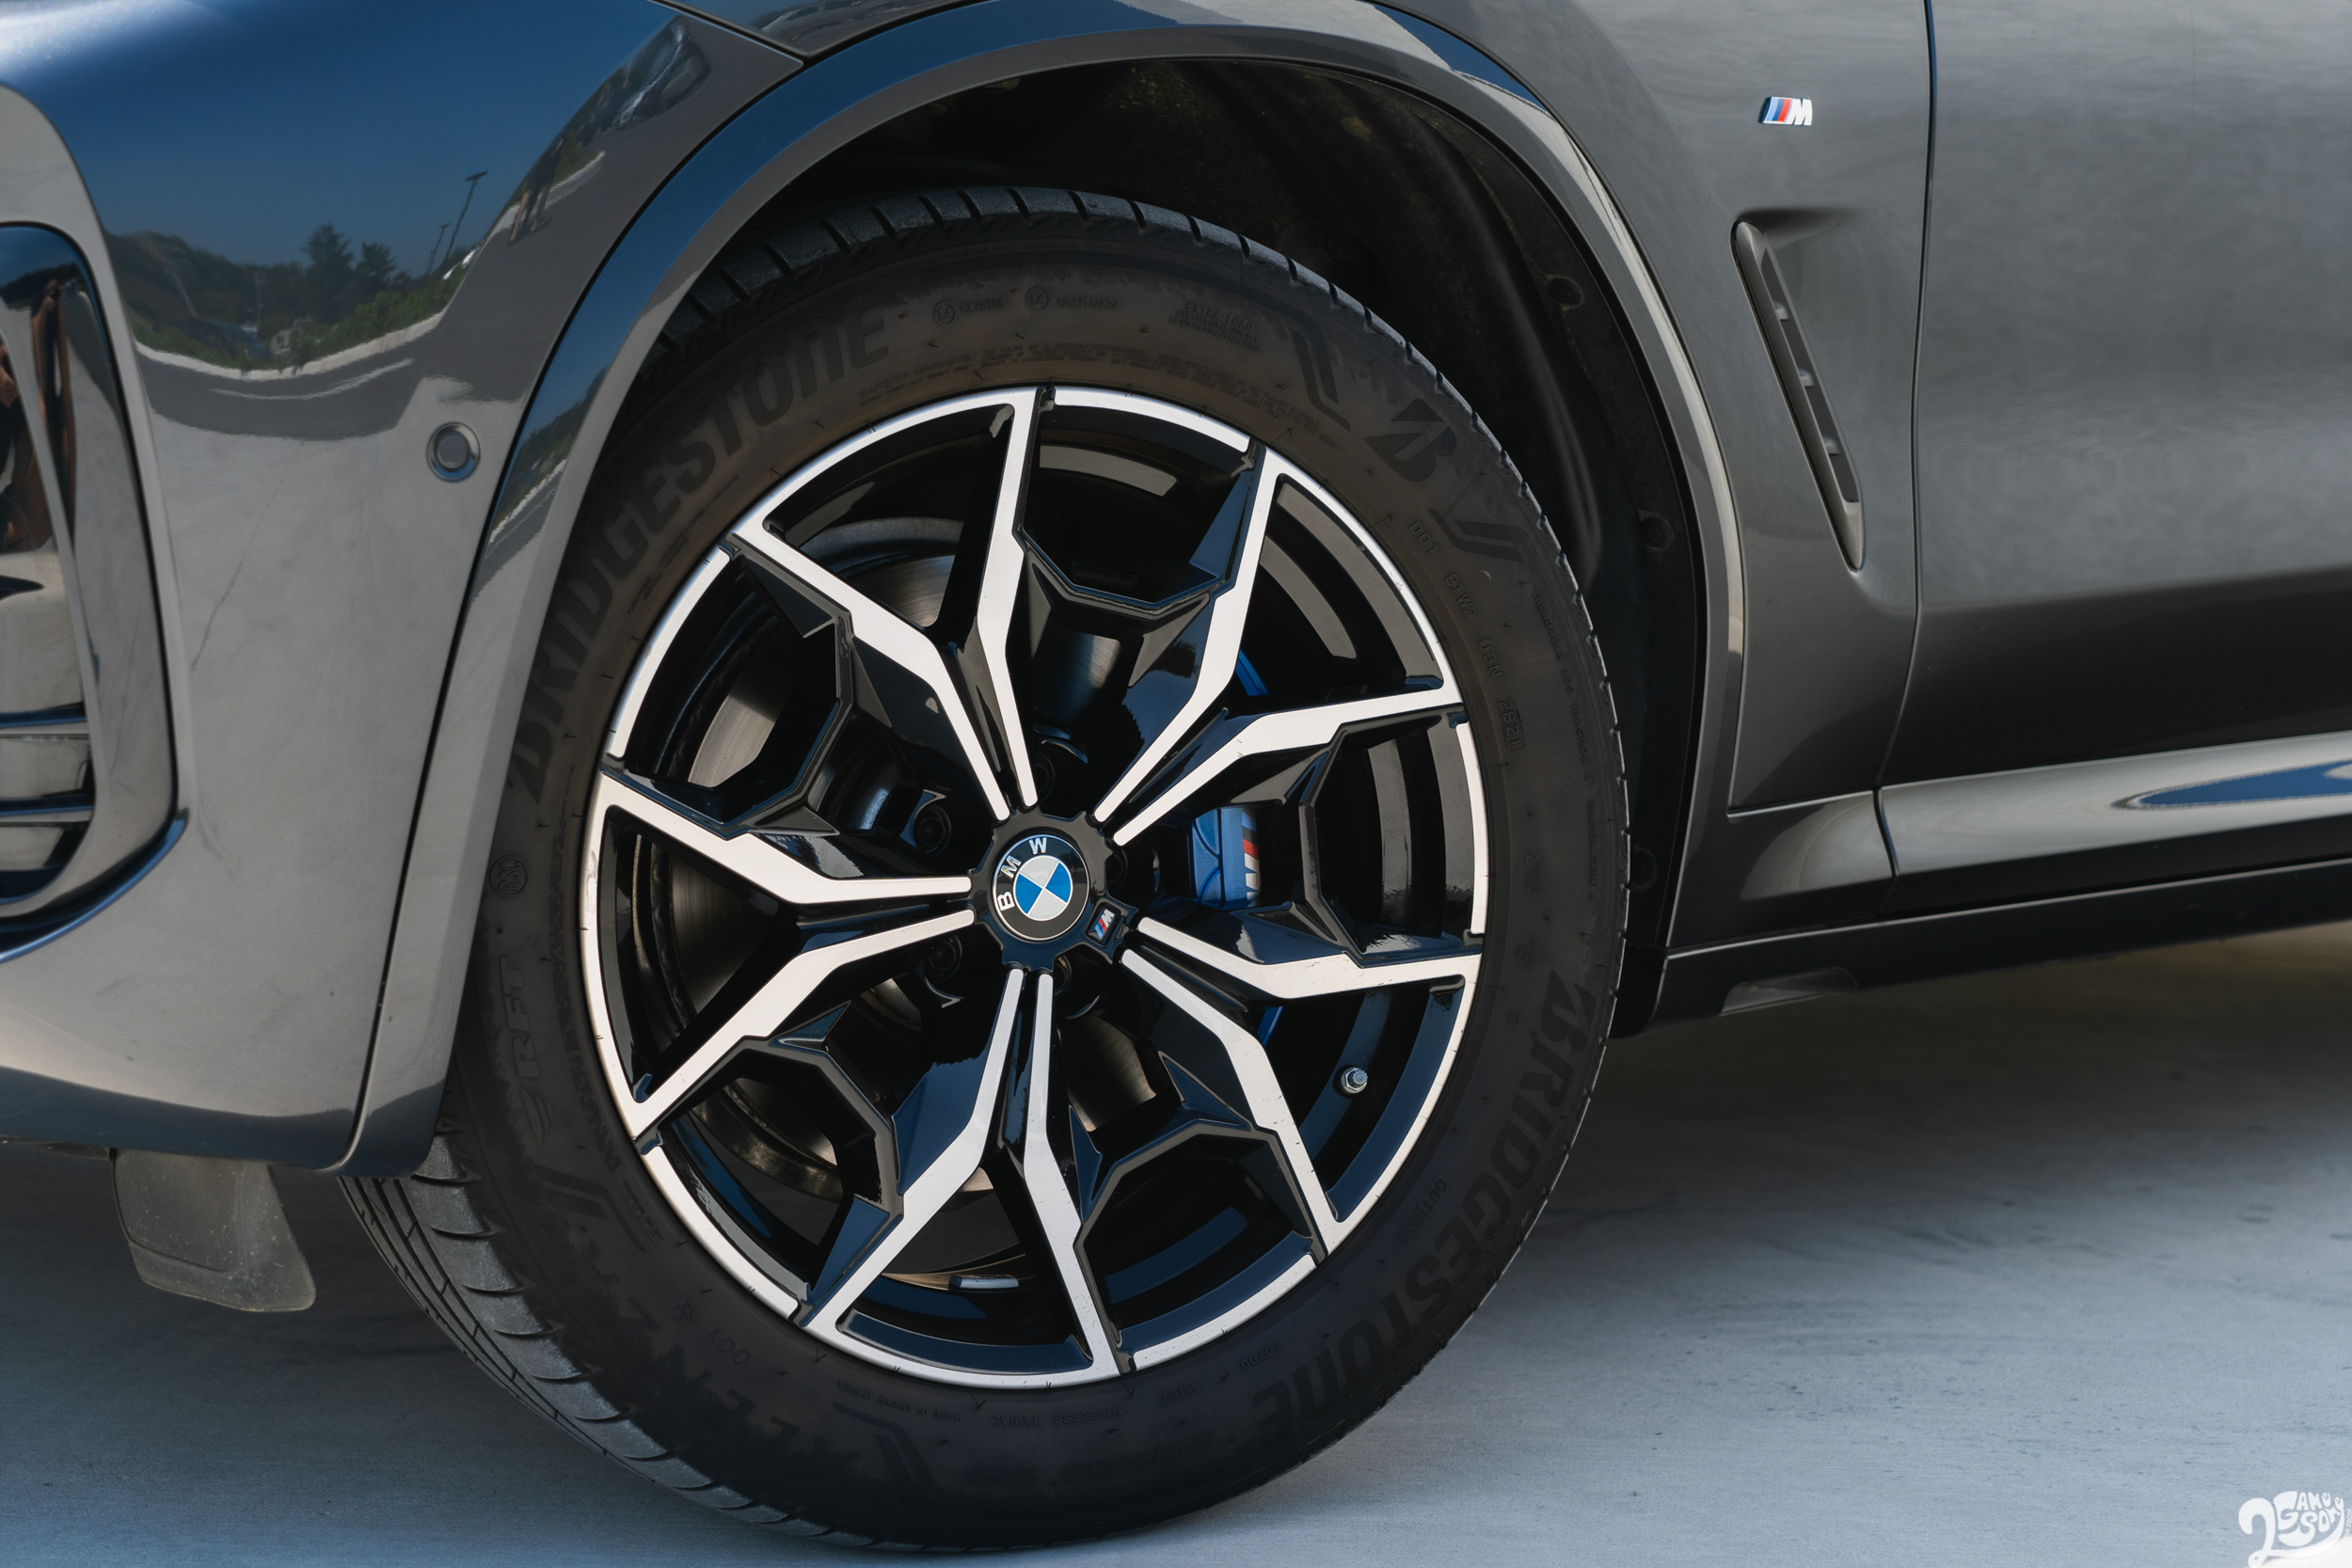 X3 xDrive30i 所標配的圈胎組為 245 / 50 R19 規格。